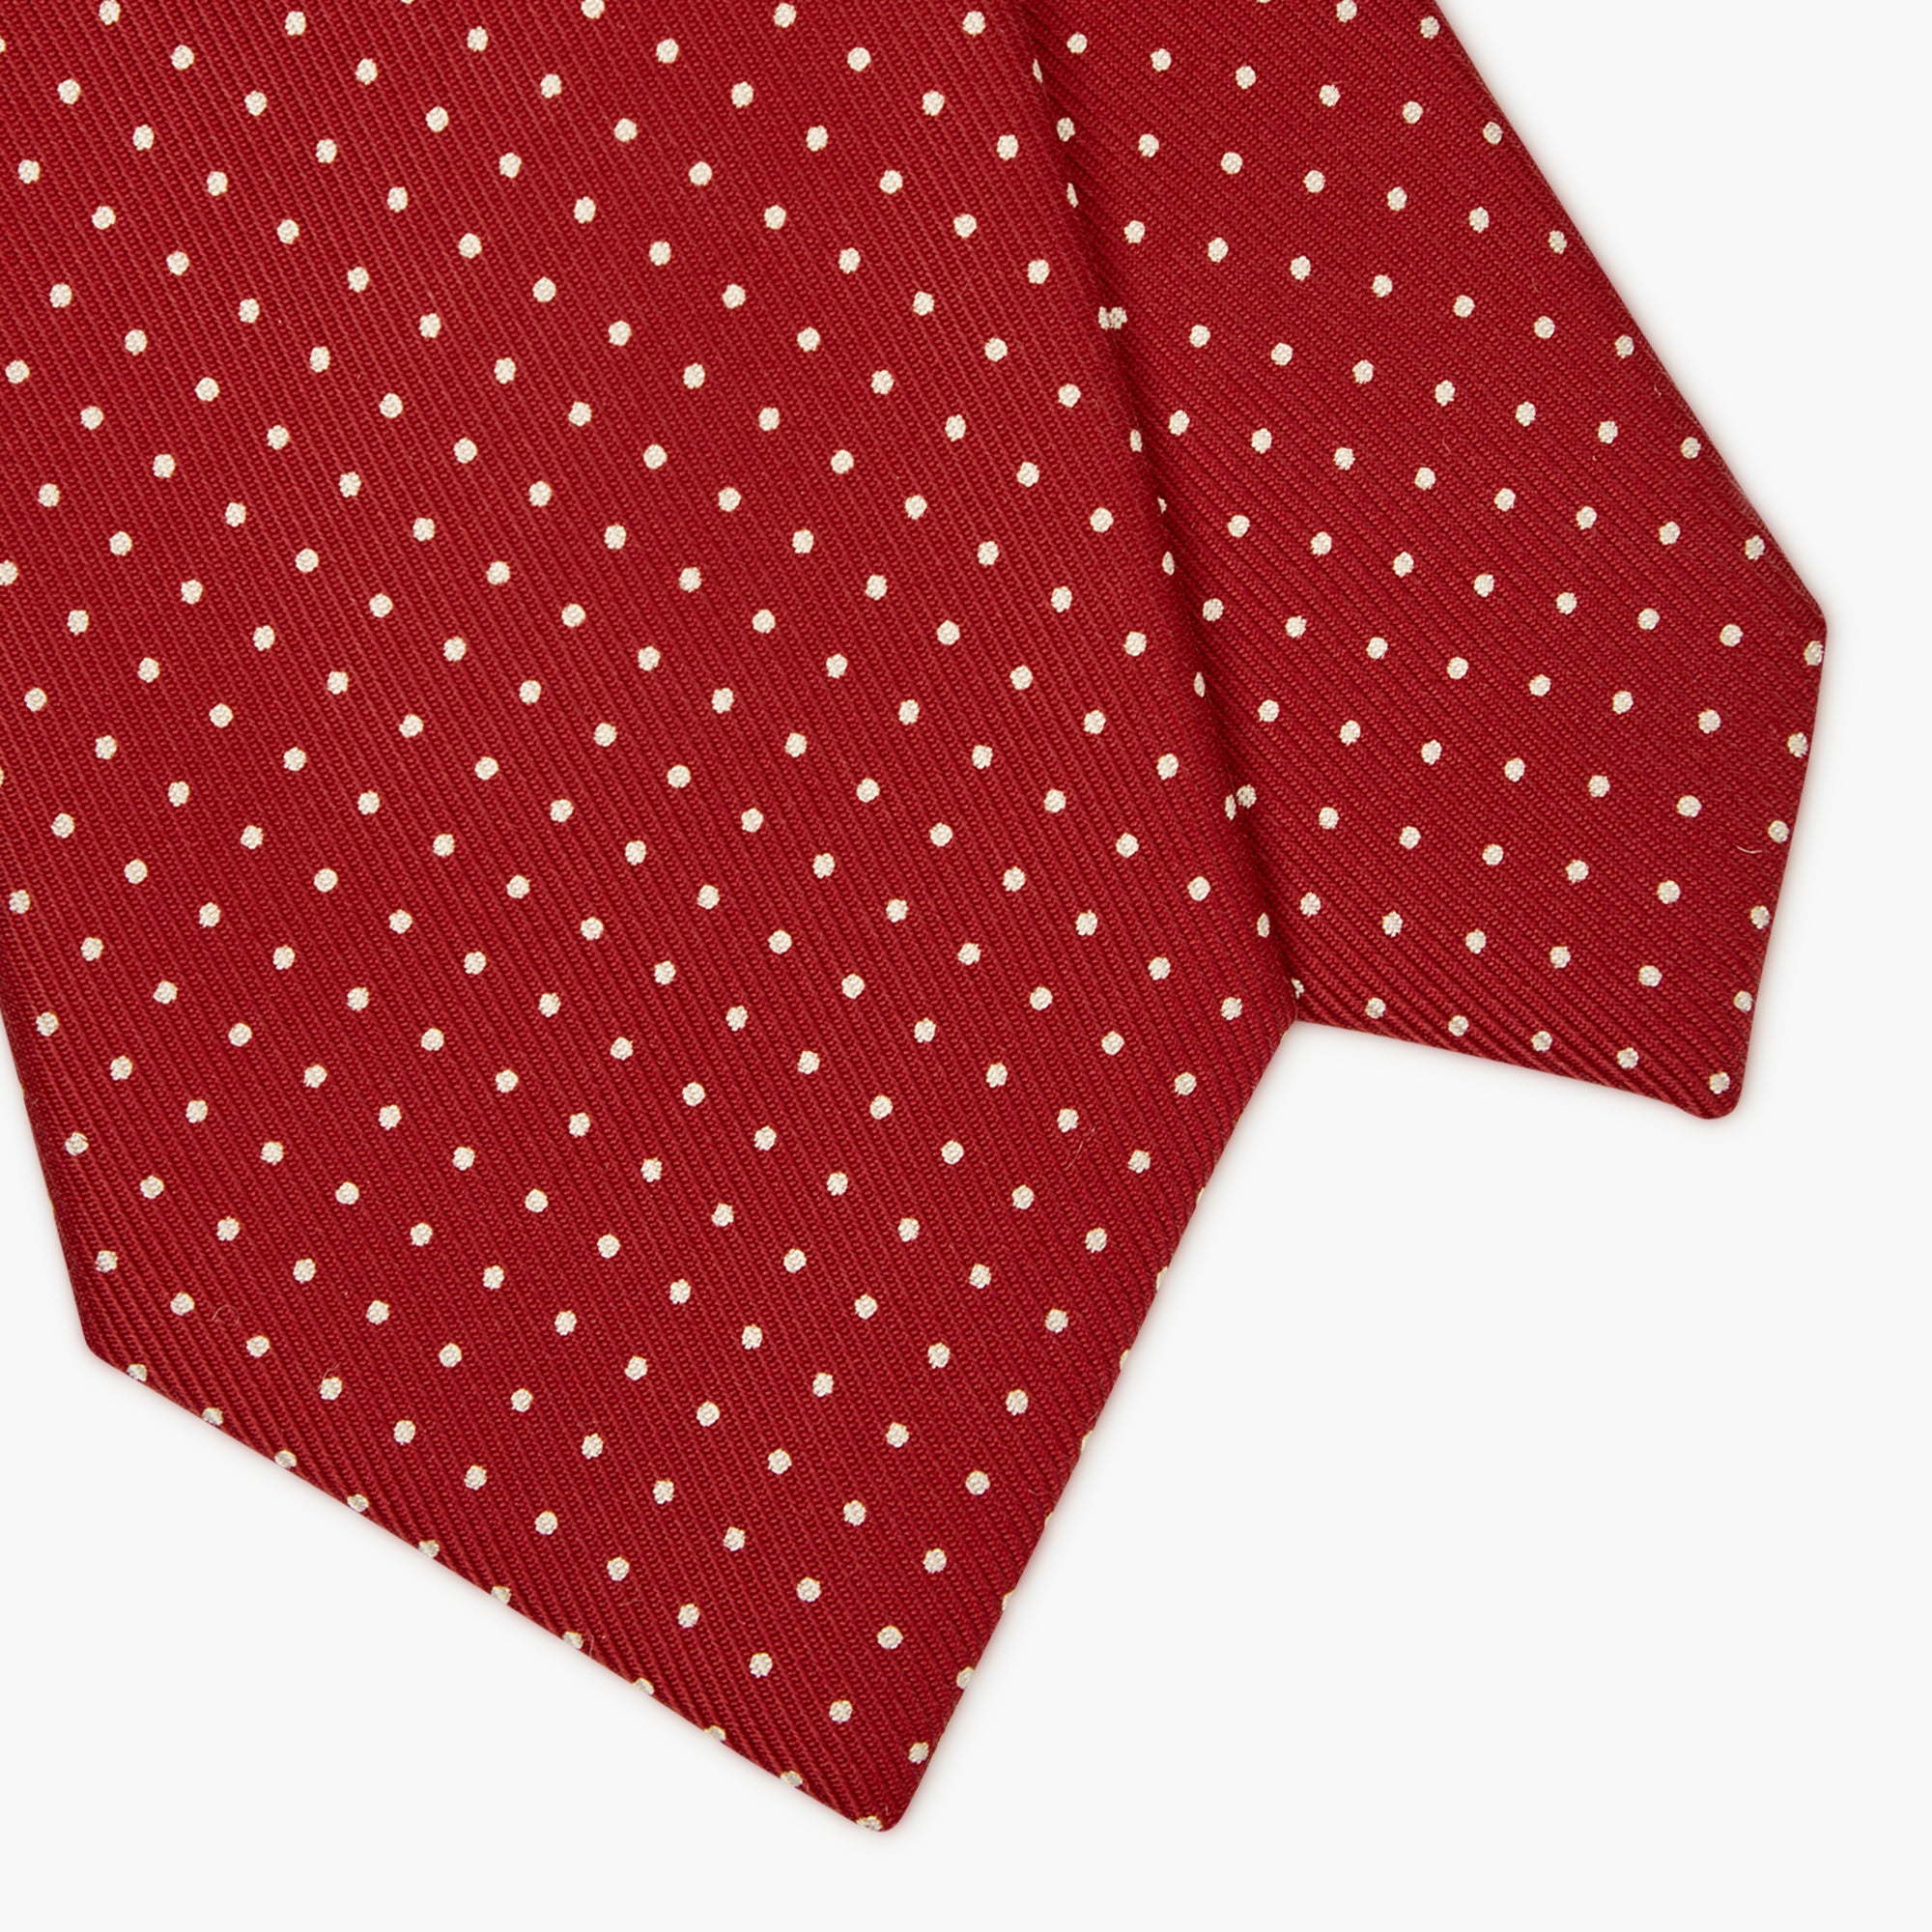 3-Fold Polka Dot Printed English Silk Tie - Burgundy